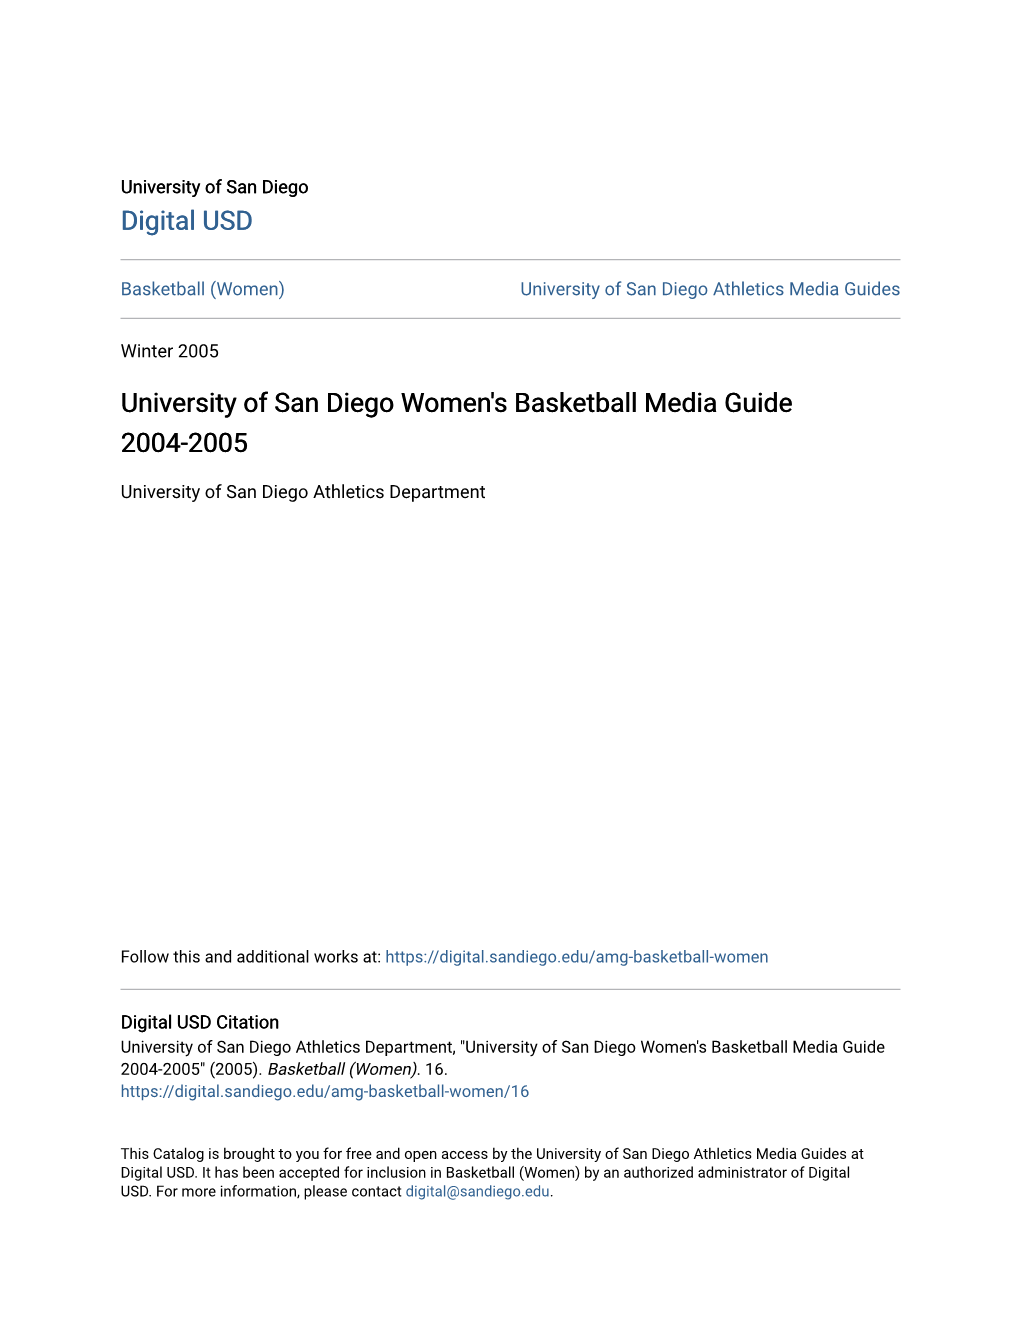 University of San Diego Women's Basketball Media Guide 2004-2005